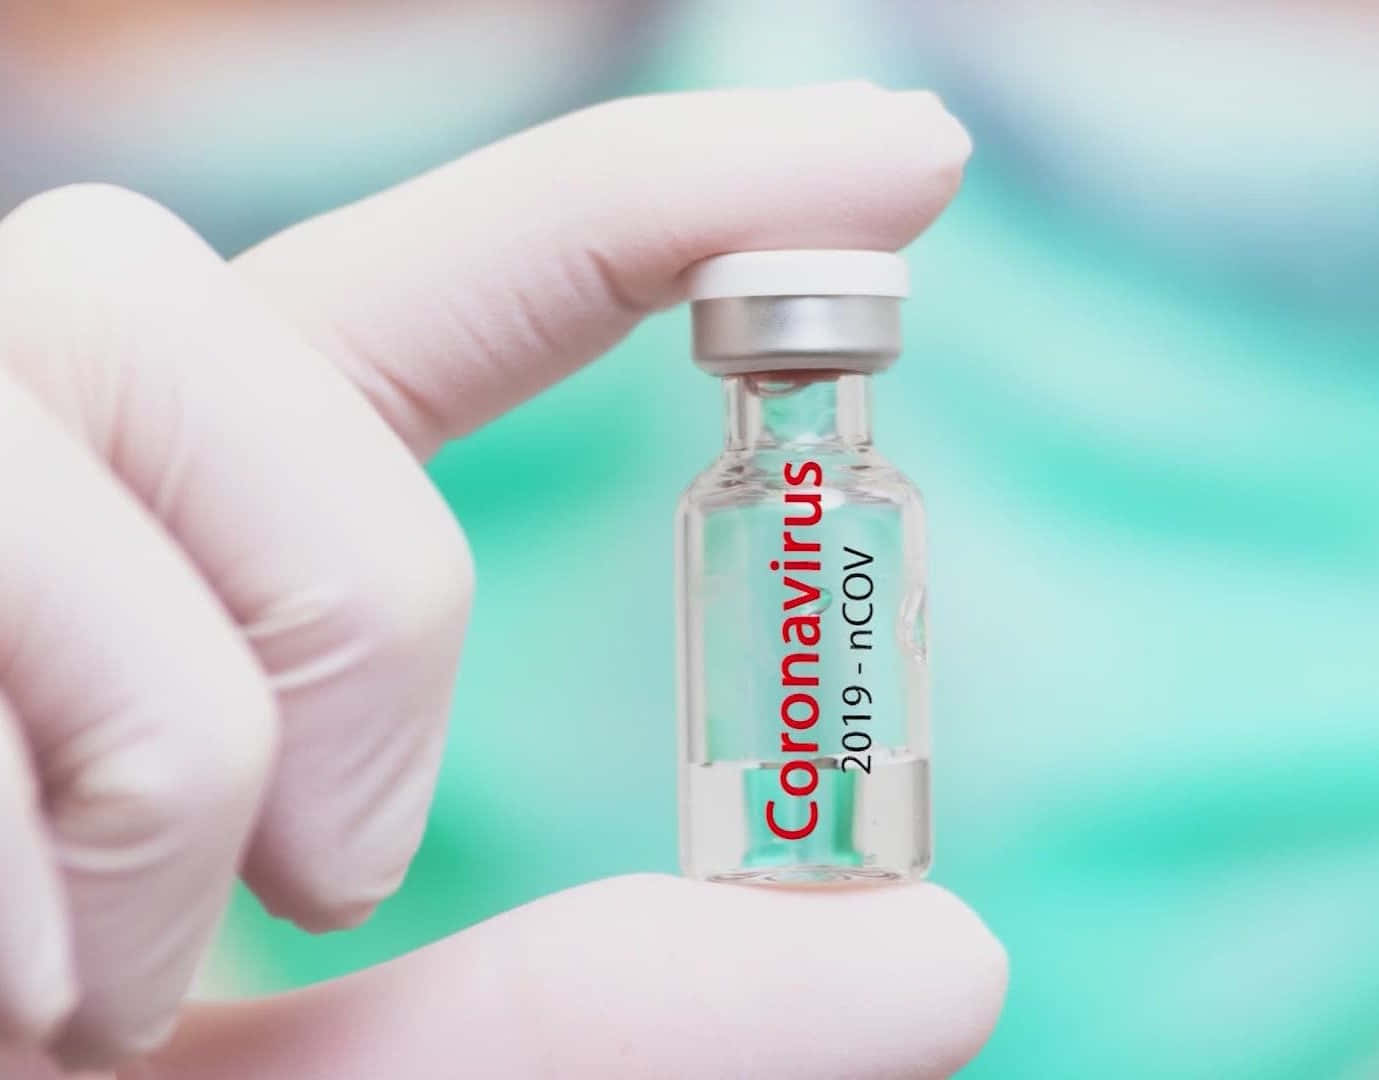 Corona Vaccine billedtapet tager et vinteraktivt tema.